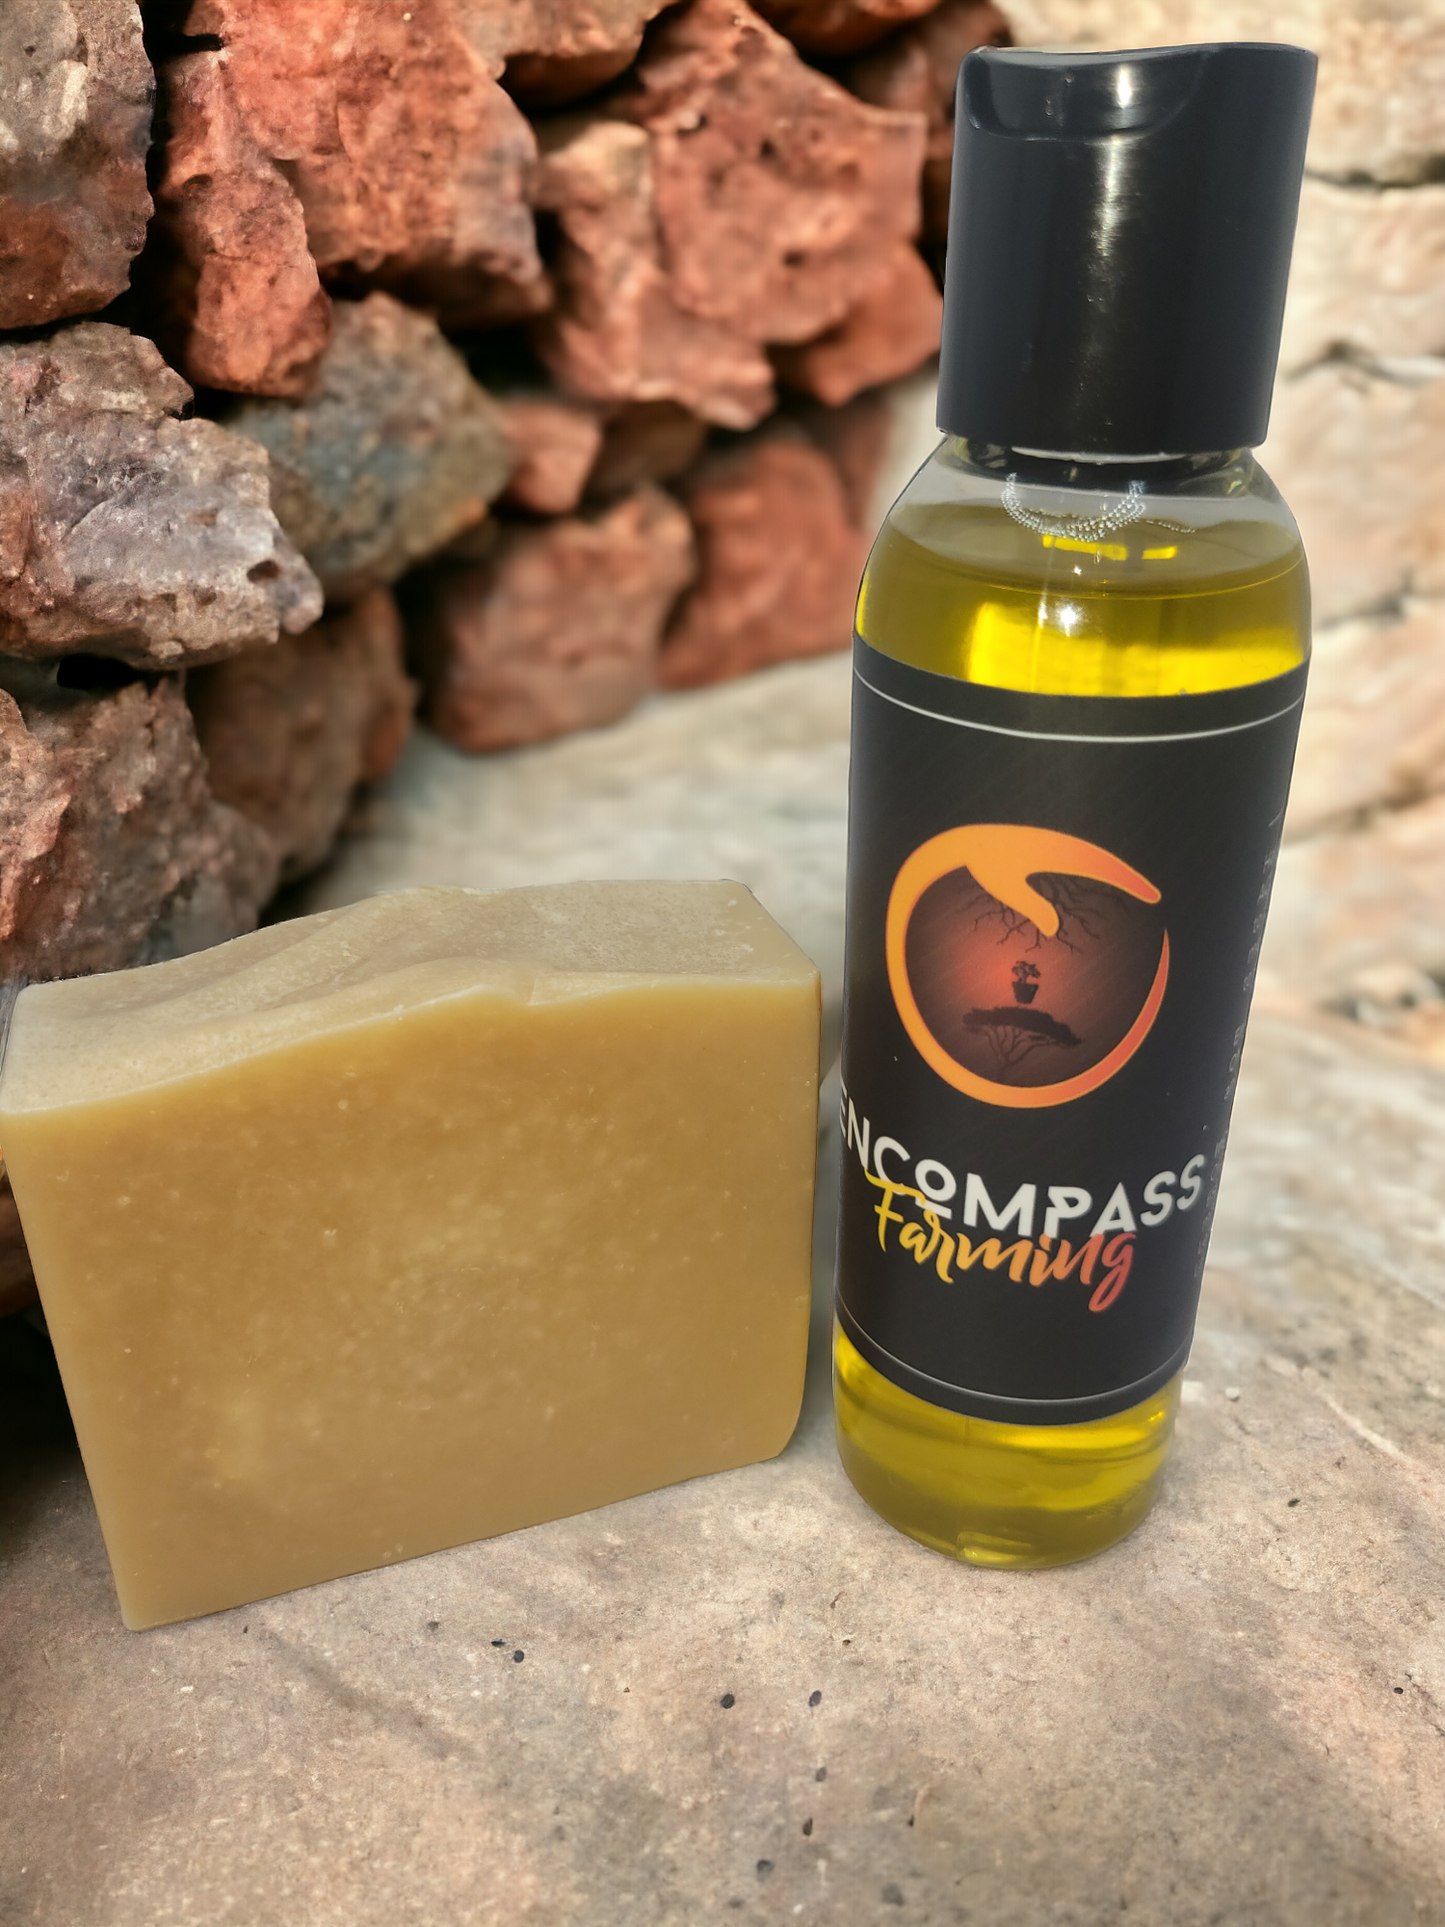 1-Encompass Oil Natural Goat Milk Soap Nontoxic & Fragrance oil free